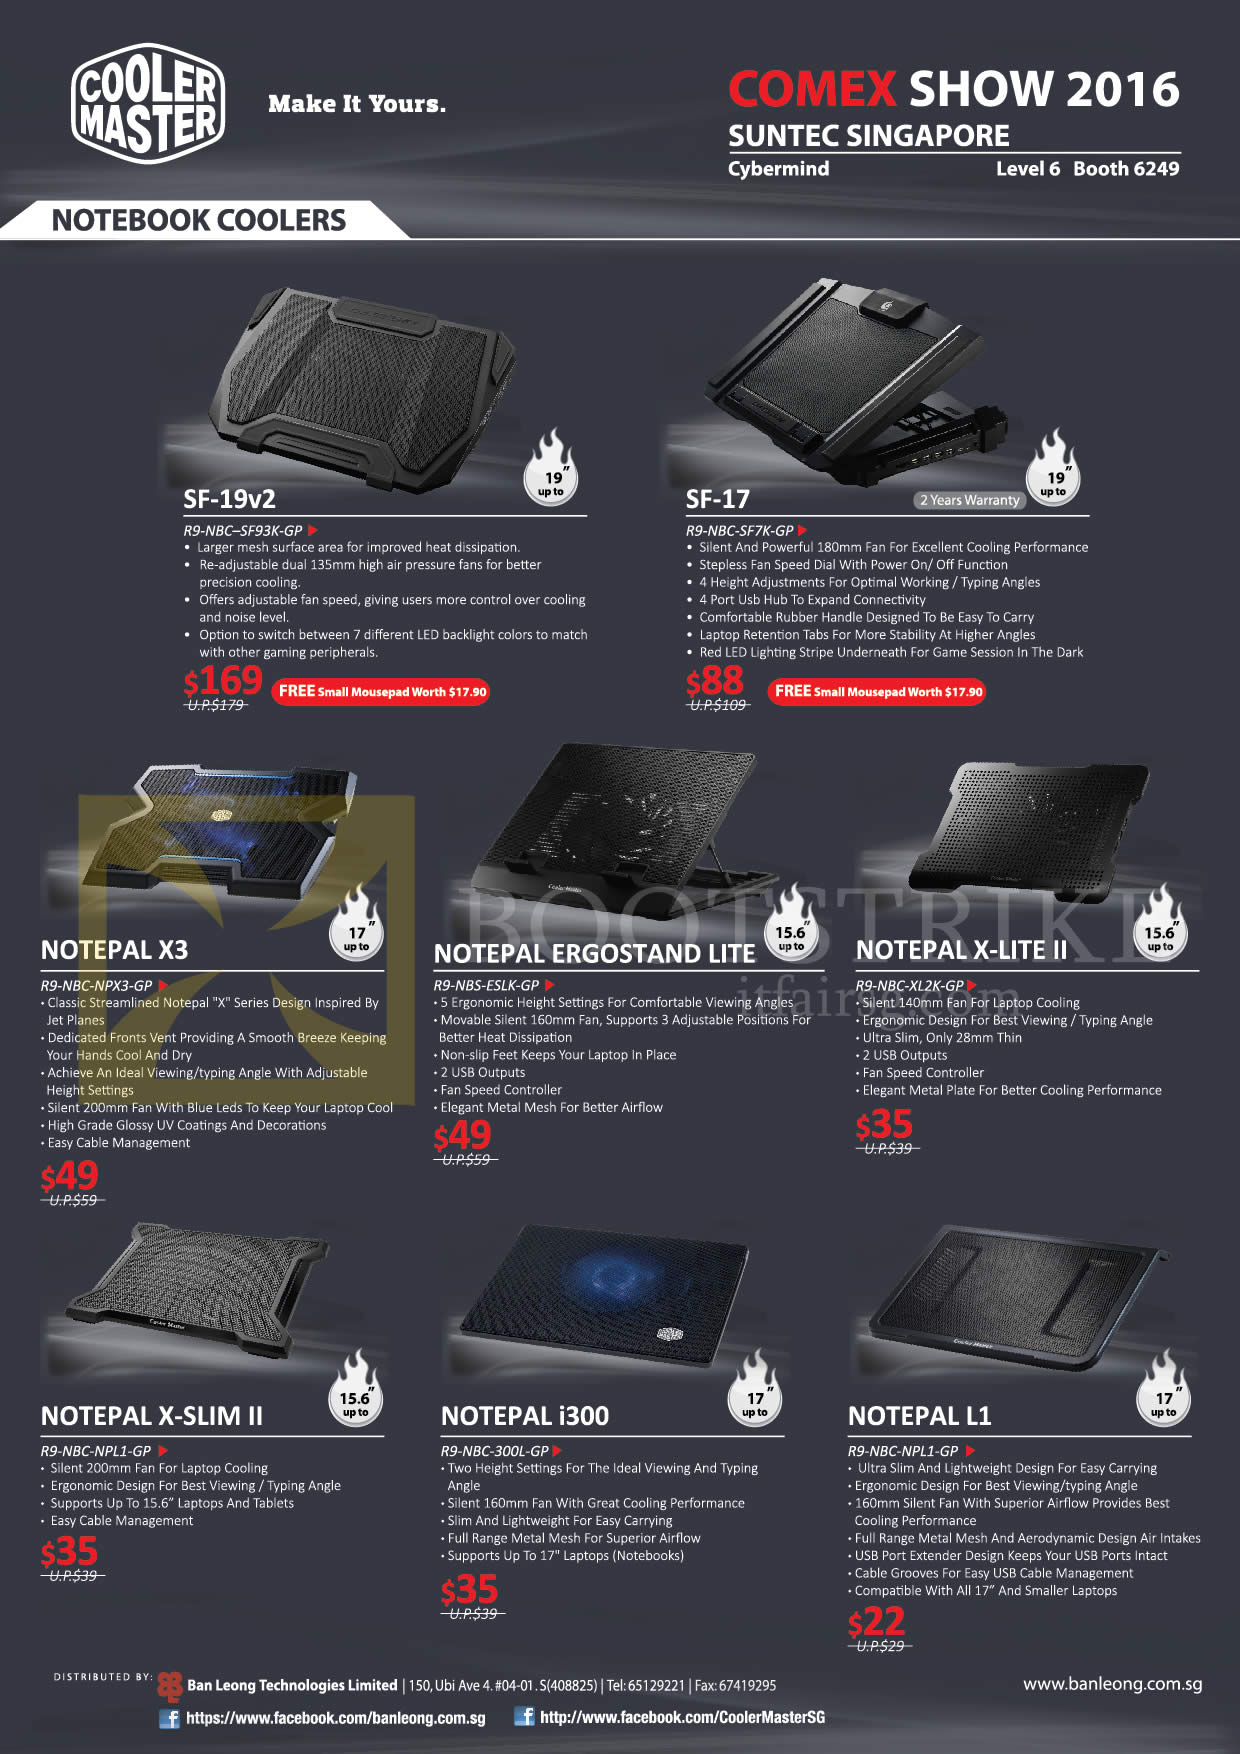 COMEX 2016 price list image brochure of Cybermind Cooler Master Notebook Coolers, SF-19v2, 17, Notepal X3, Ergostand Lite, X-Lite II, X-Slim II, I300, L1